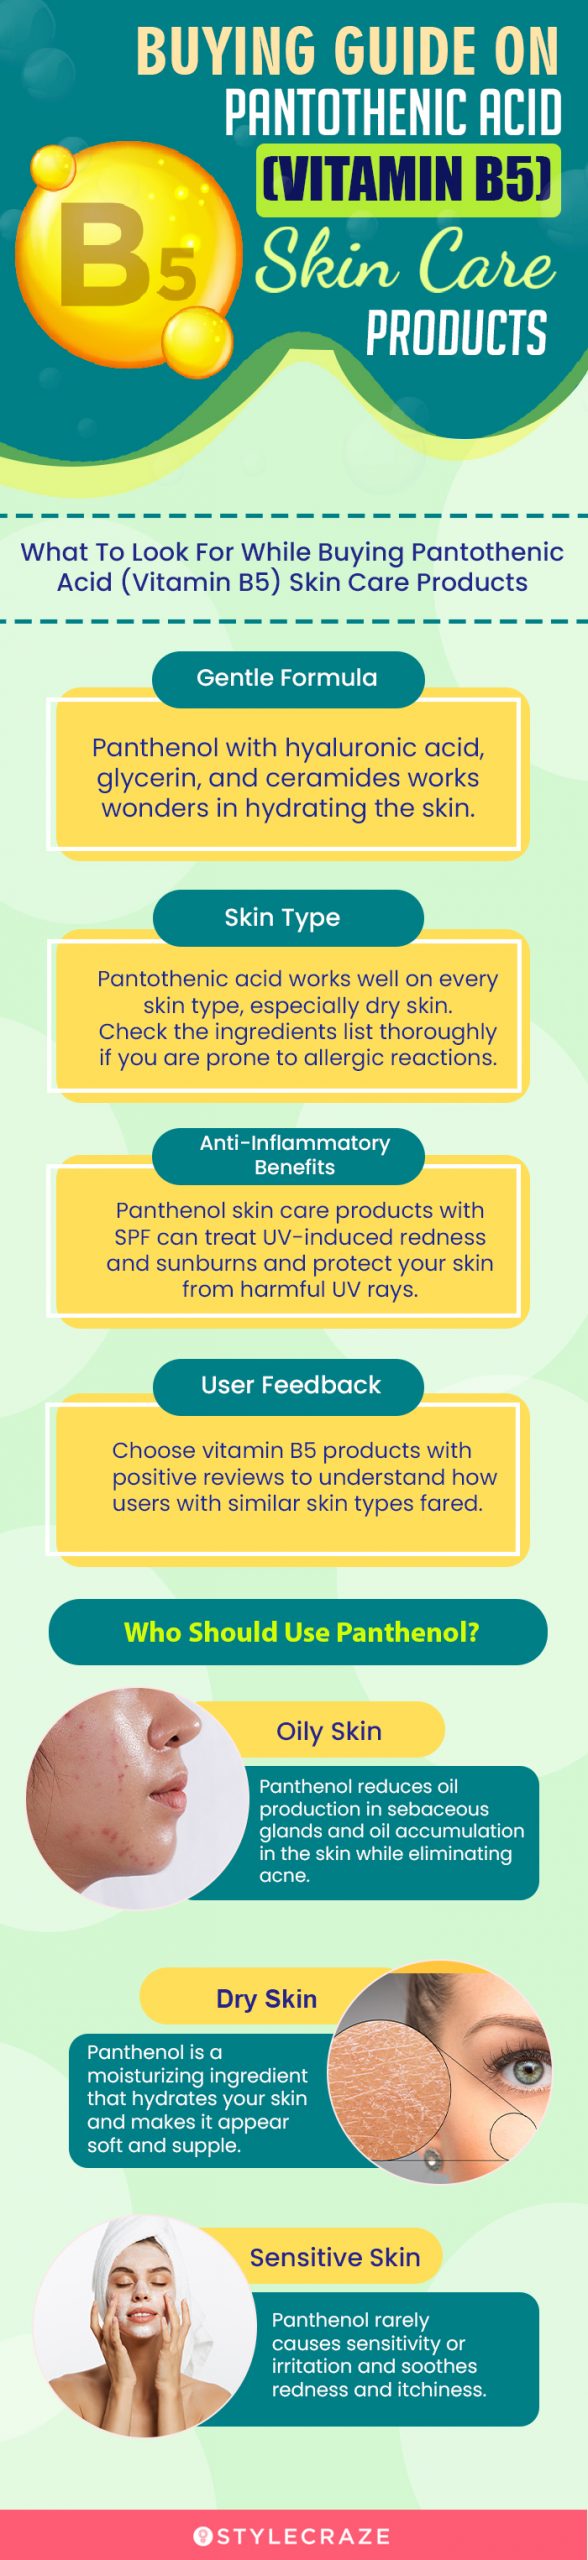 Buying Guide On Pantothenic Acid (Vitamin B5) Skin[infographic]